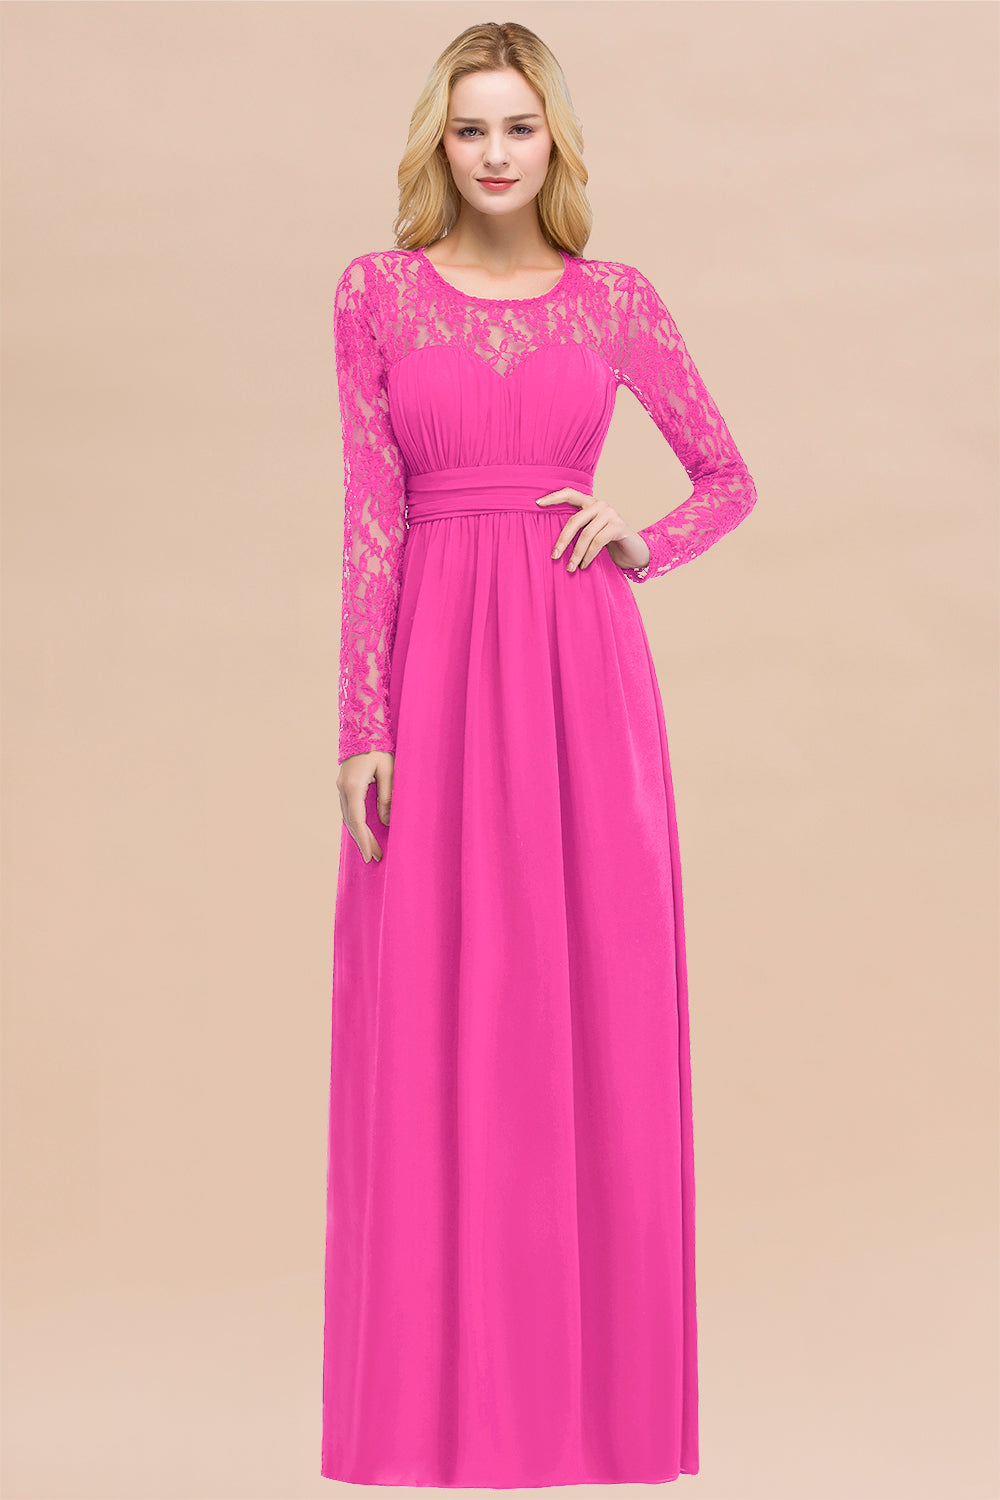 Elegant Lace Burgundy Bridesmaid Dresses Online with Long Sleeves